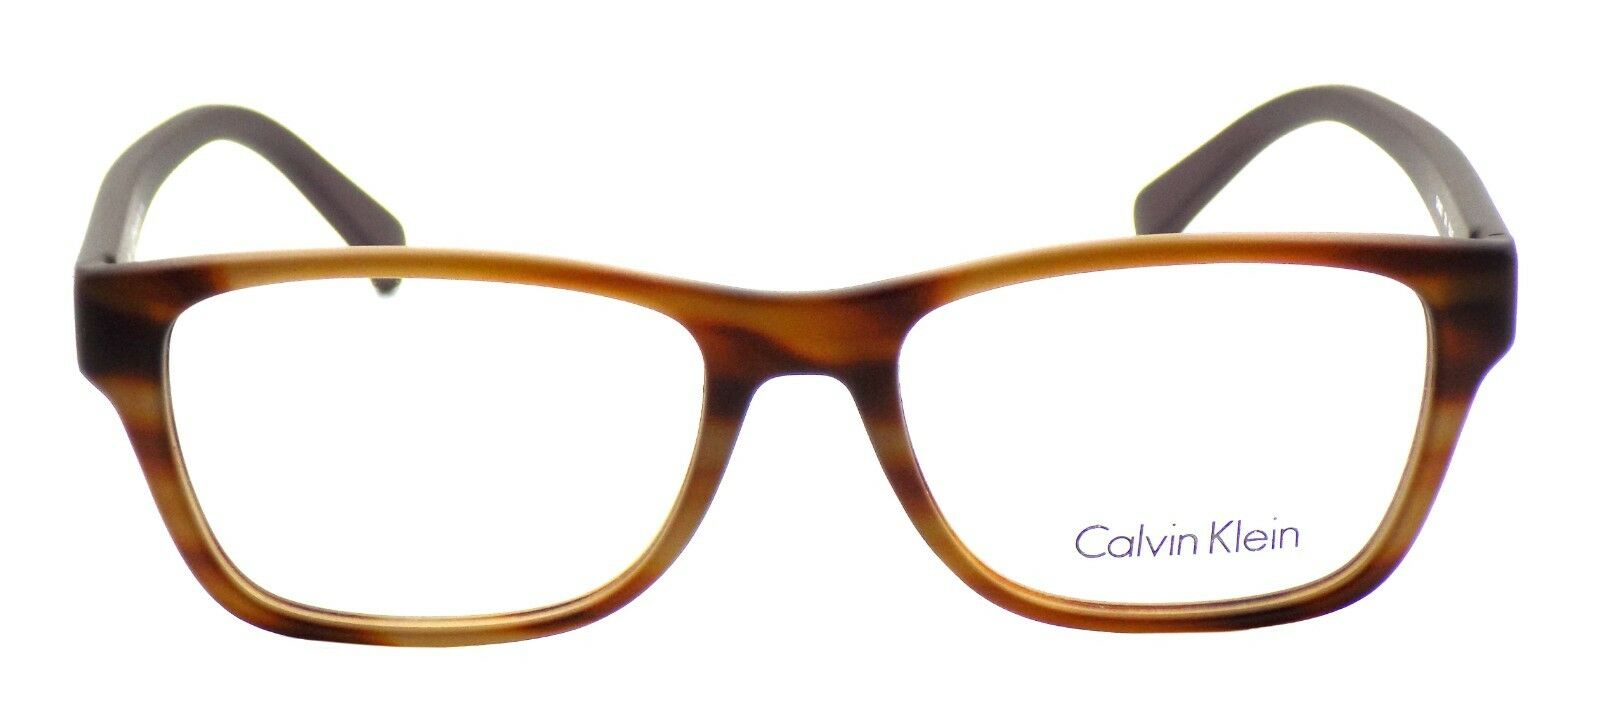 2-Calvin Klein CK5957 201 Unisex Eyeglasses Frames Brown 52-17-135 + Case ITALY-750779103678-IKSpecs